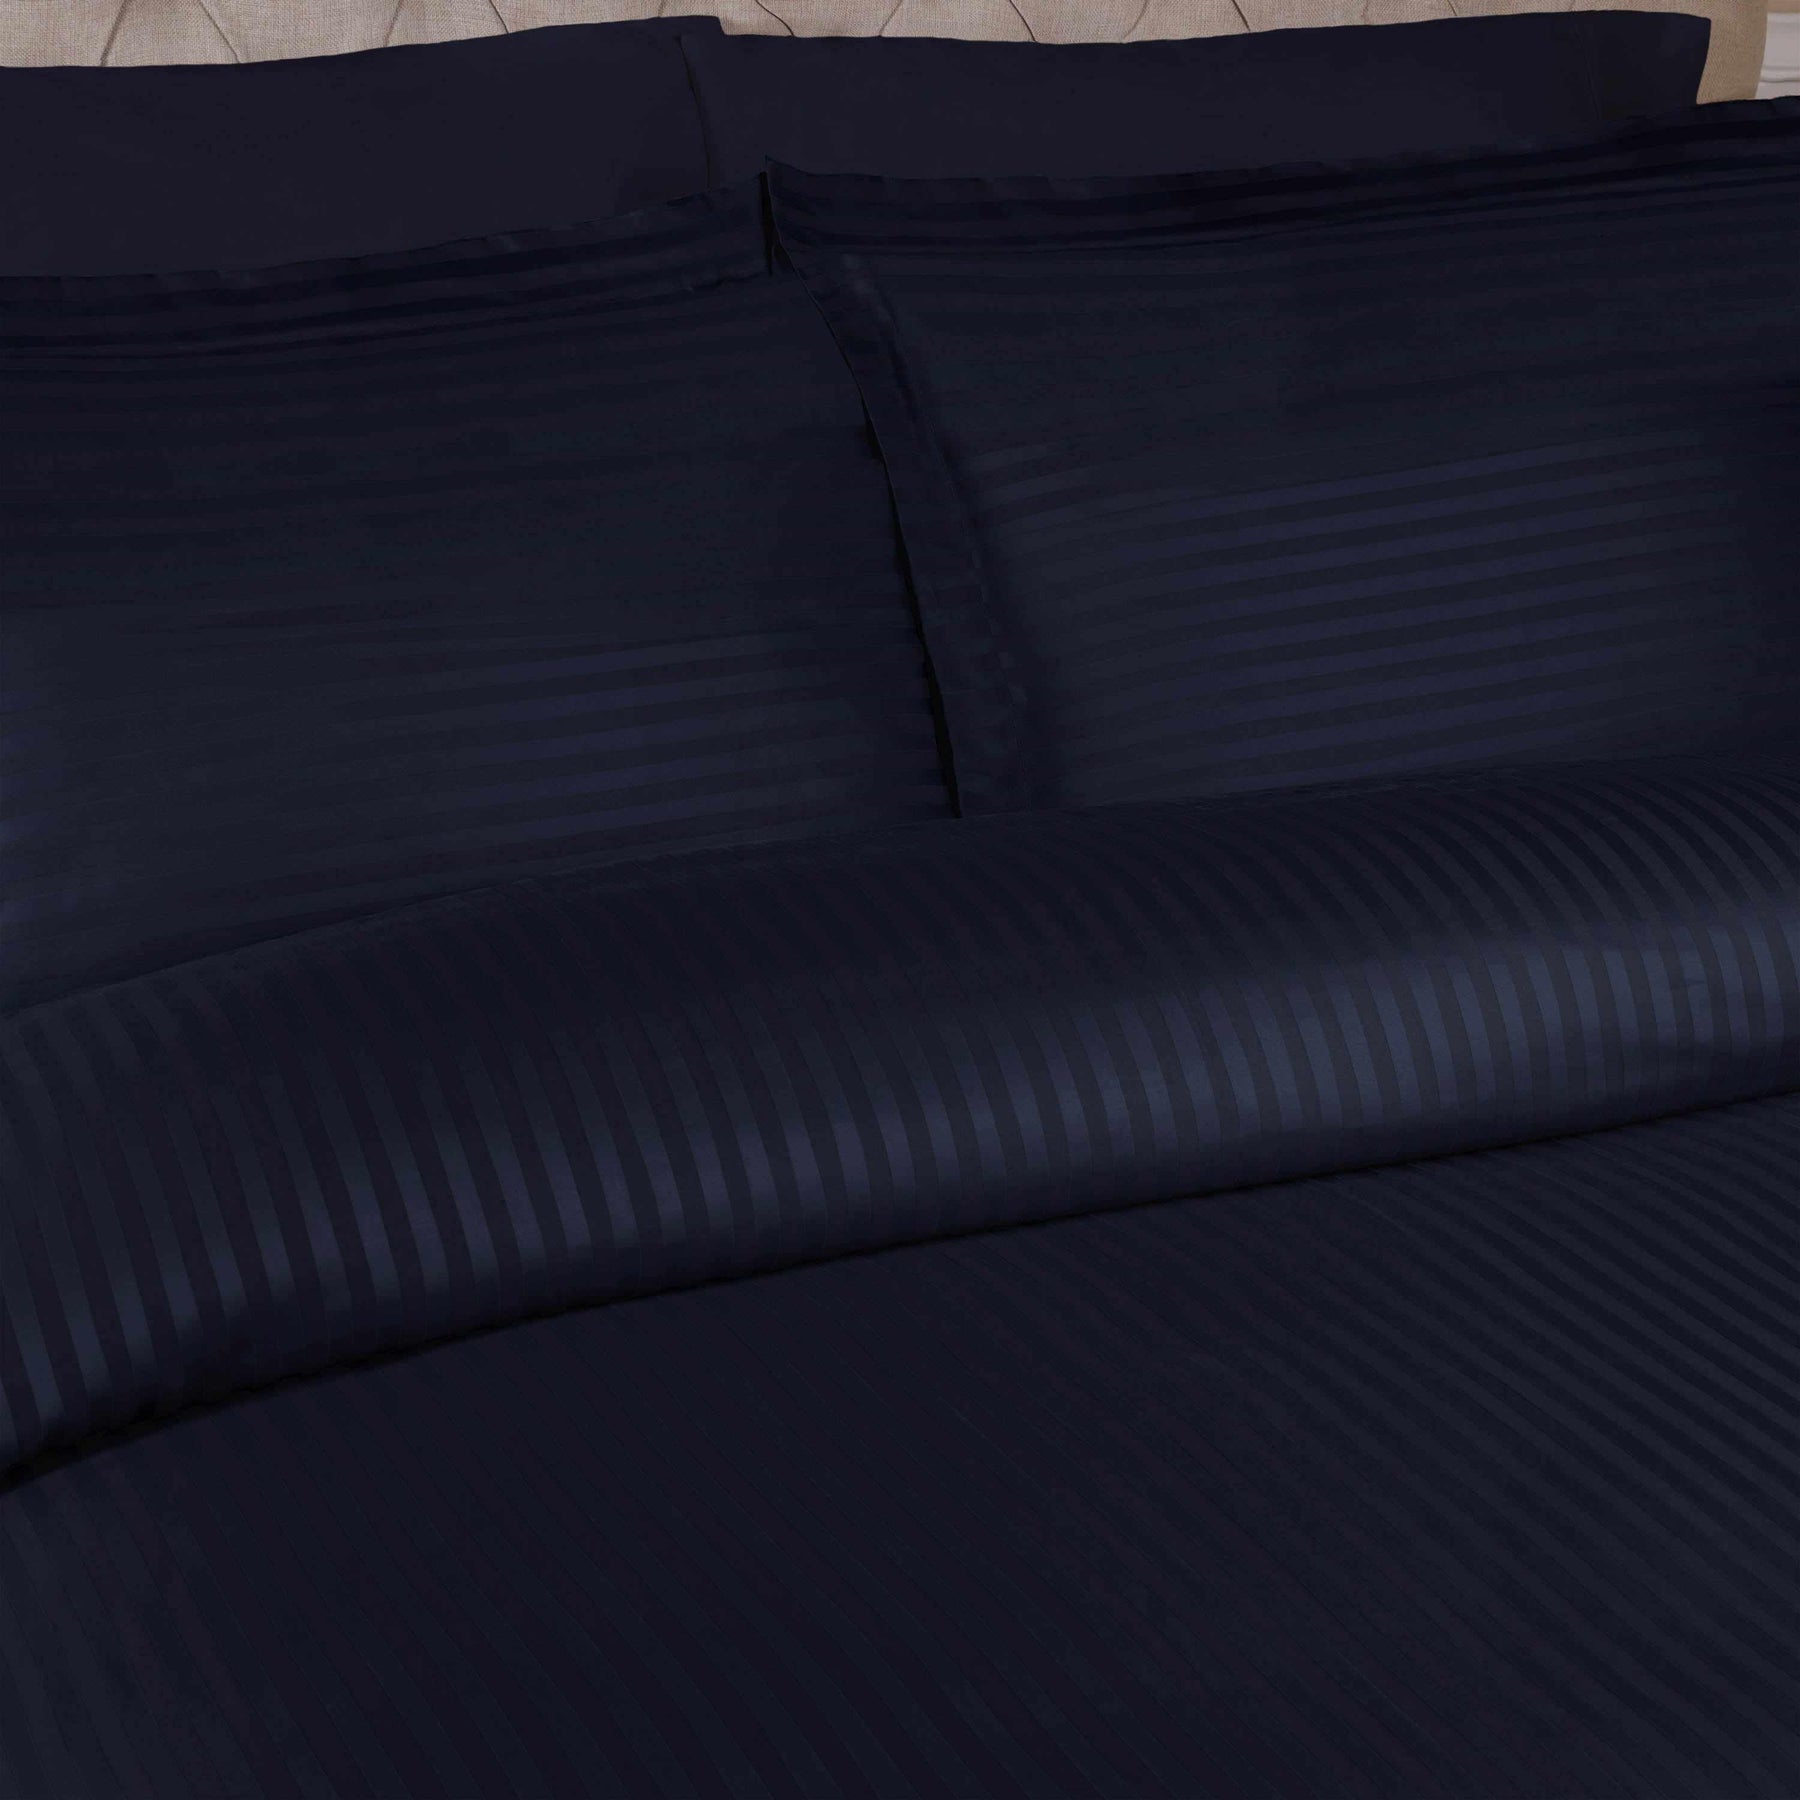 Superior 400 Thread Count Lightweight Stripe Egyptian Cotton Duvet Cover Set - Navy Blue